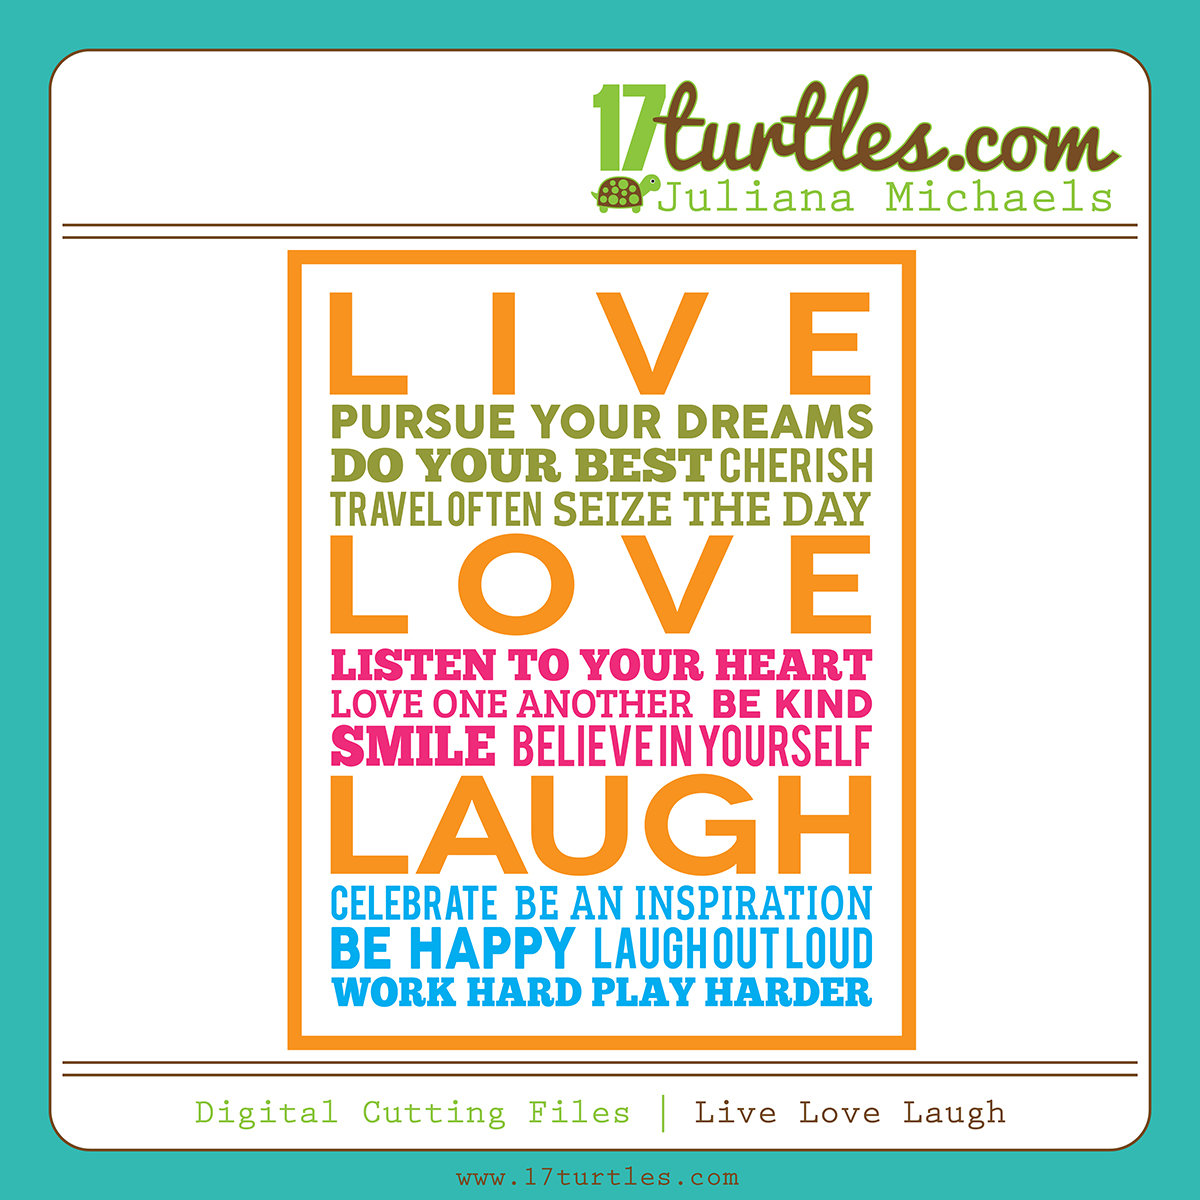 Live Love Laugh Free Digital Cutting File by Juliana Michaels 17turtles.com